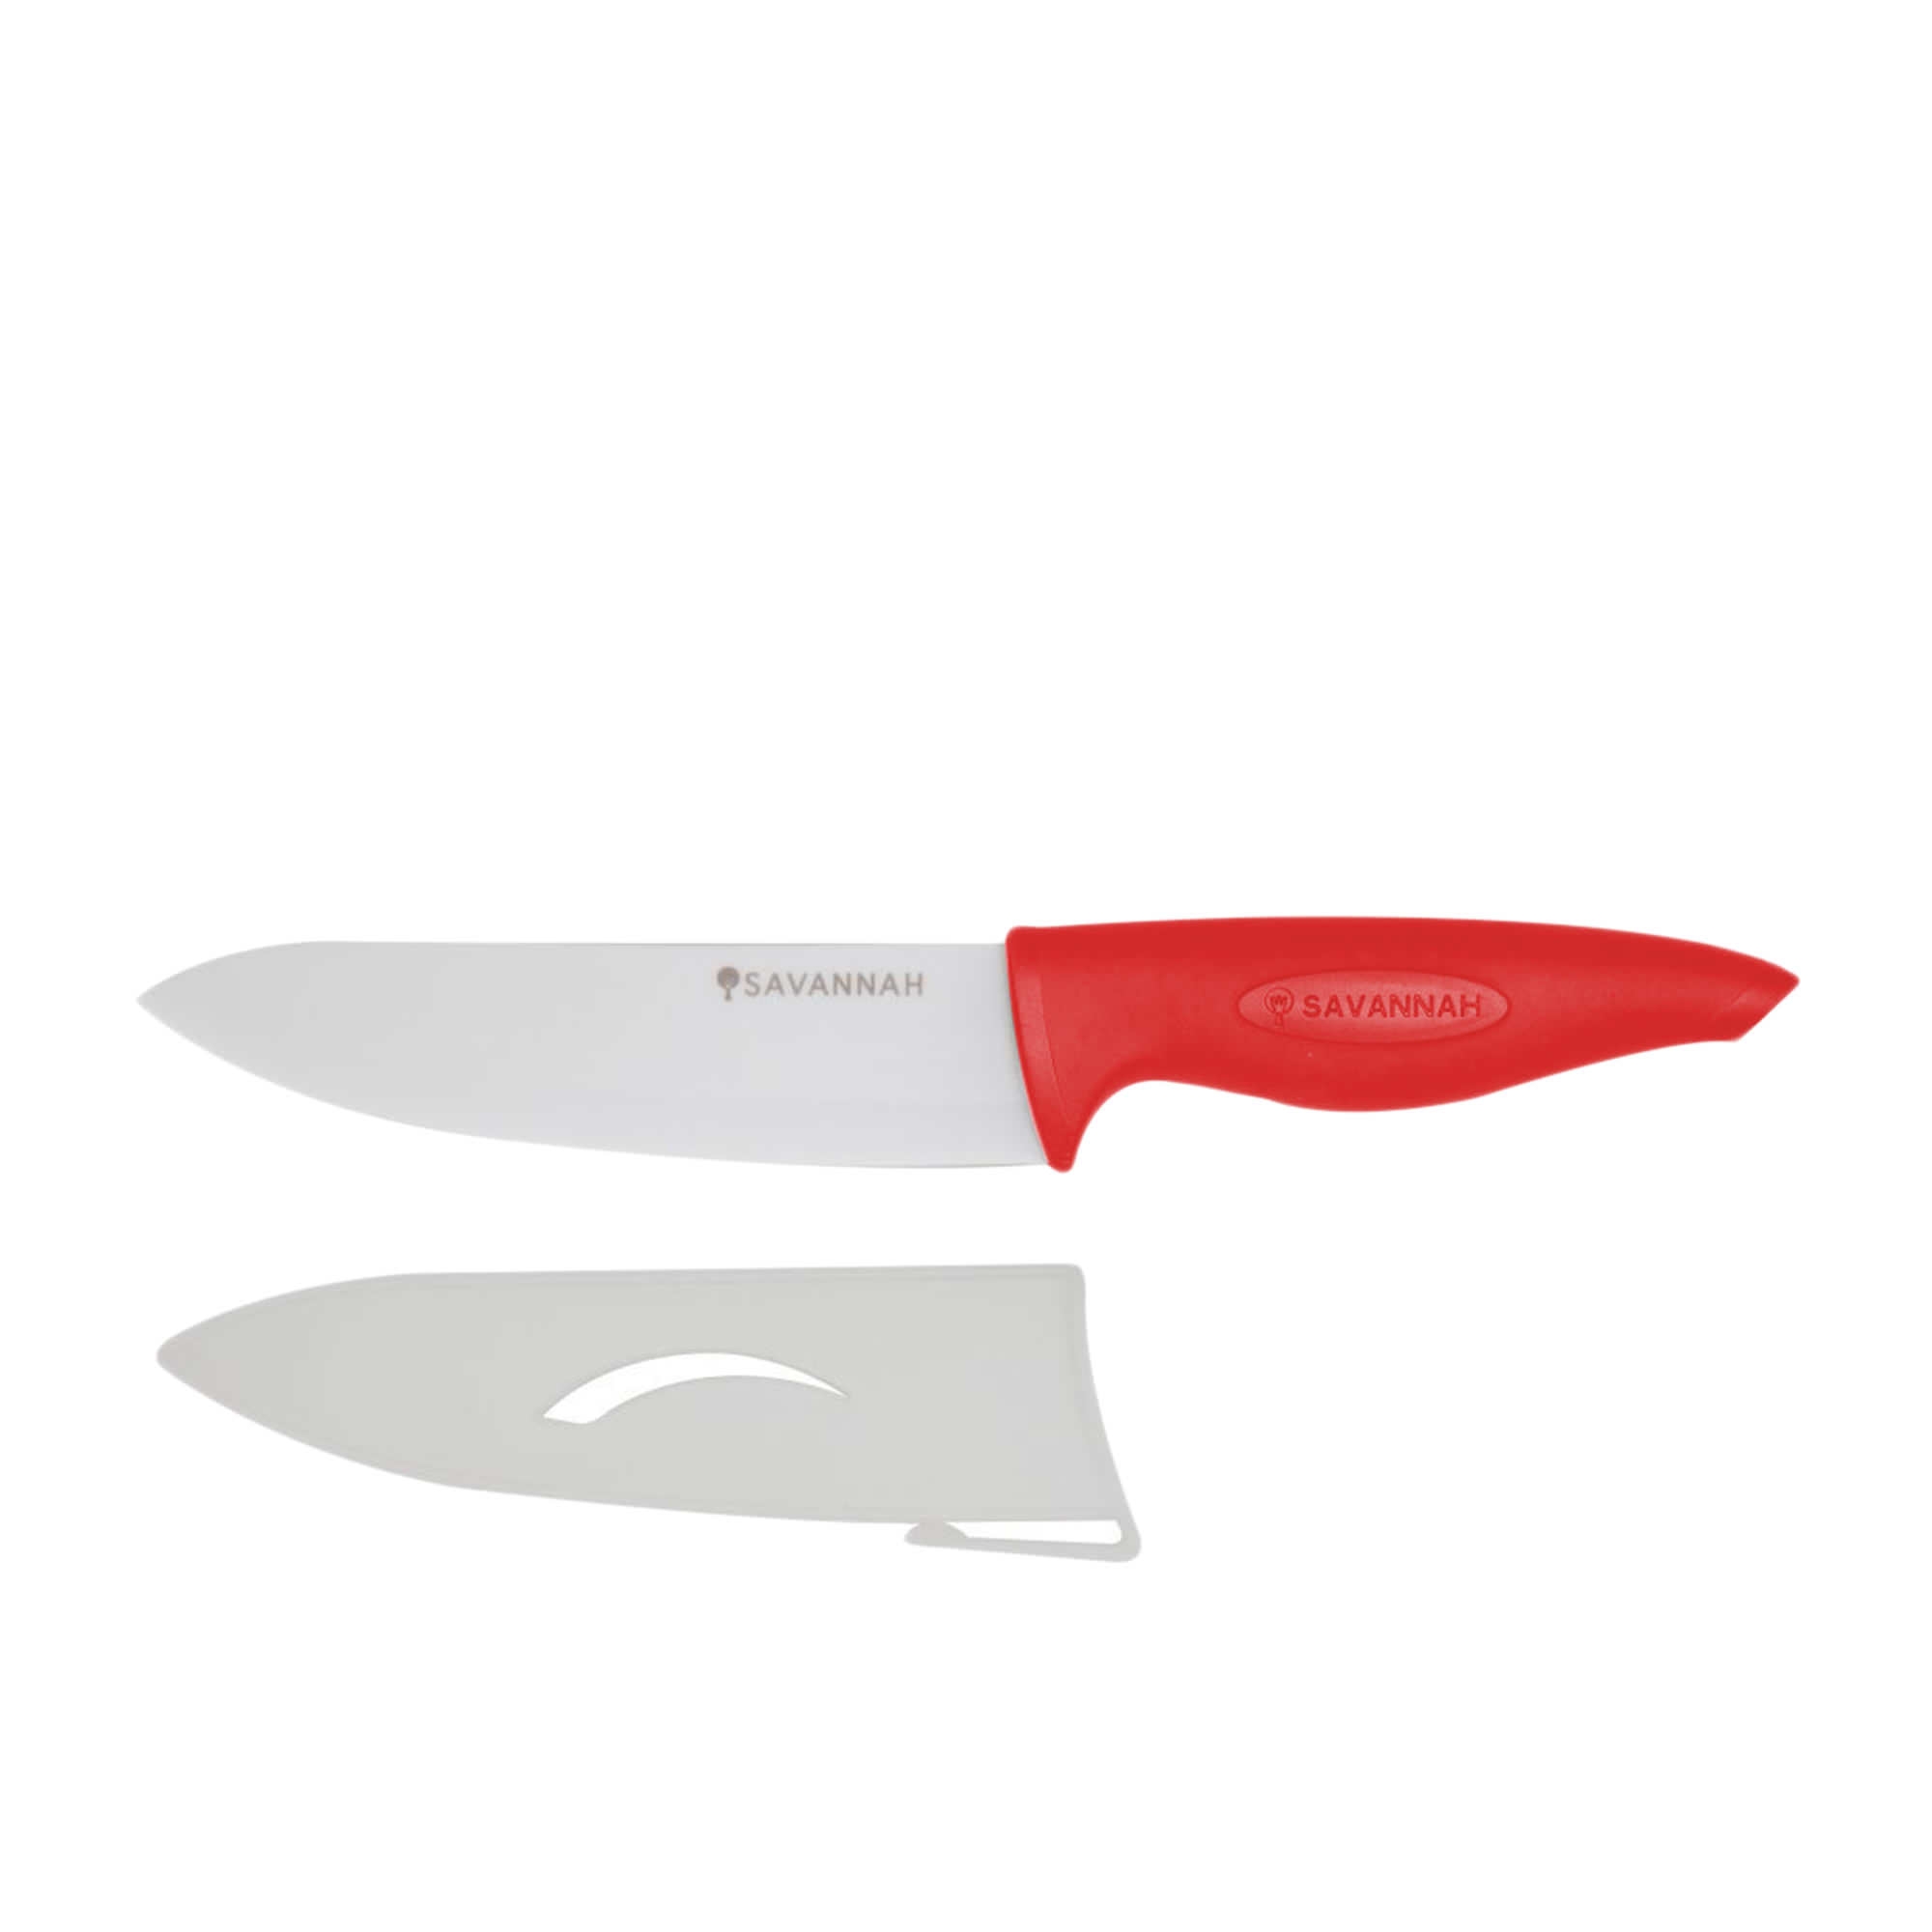 Savannah Ceramic Preparation Knife with Sheath 13cm Red Image 2